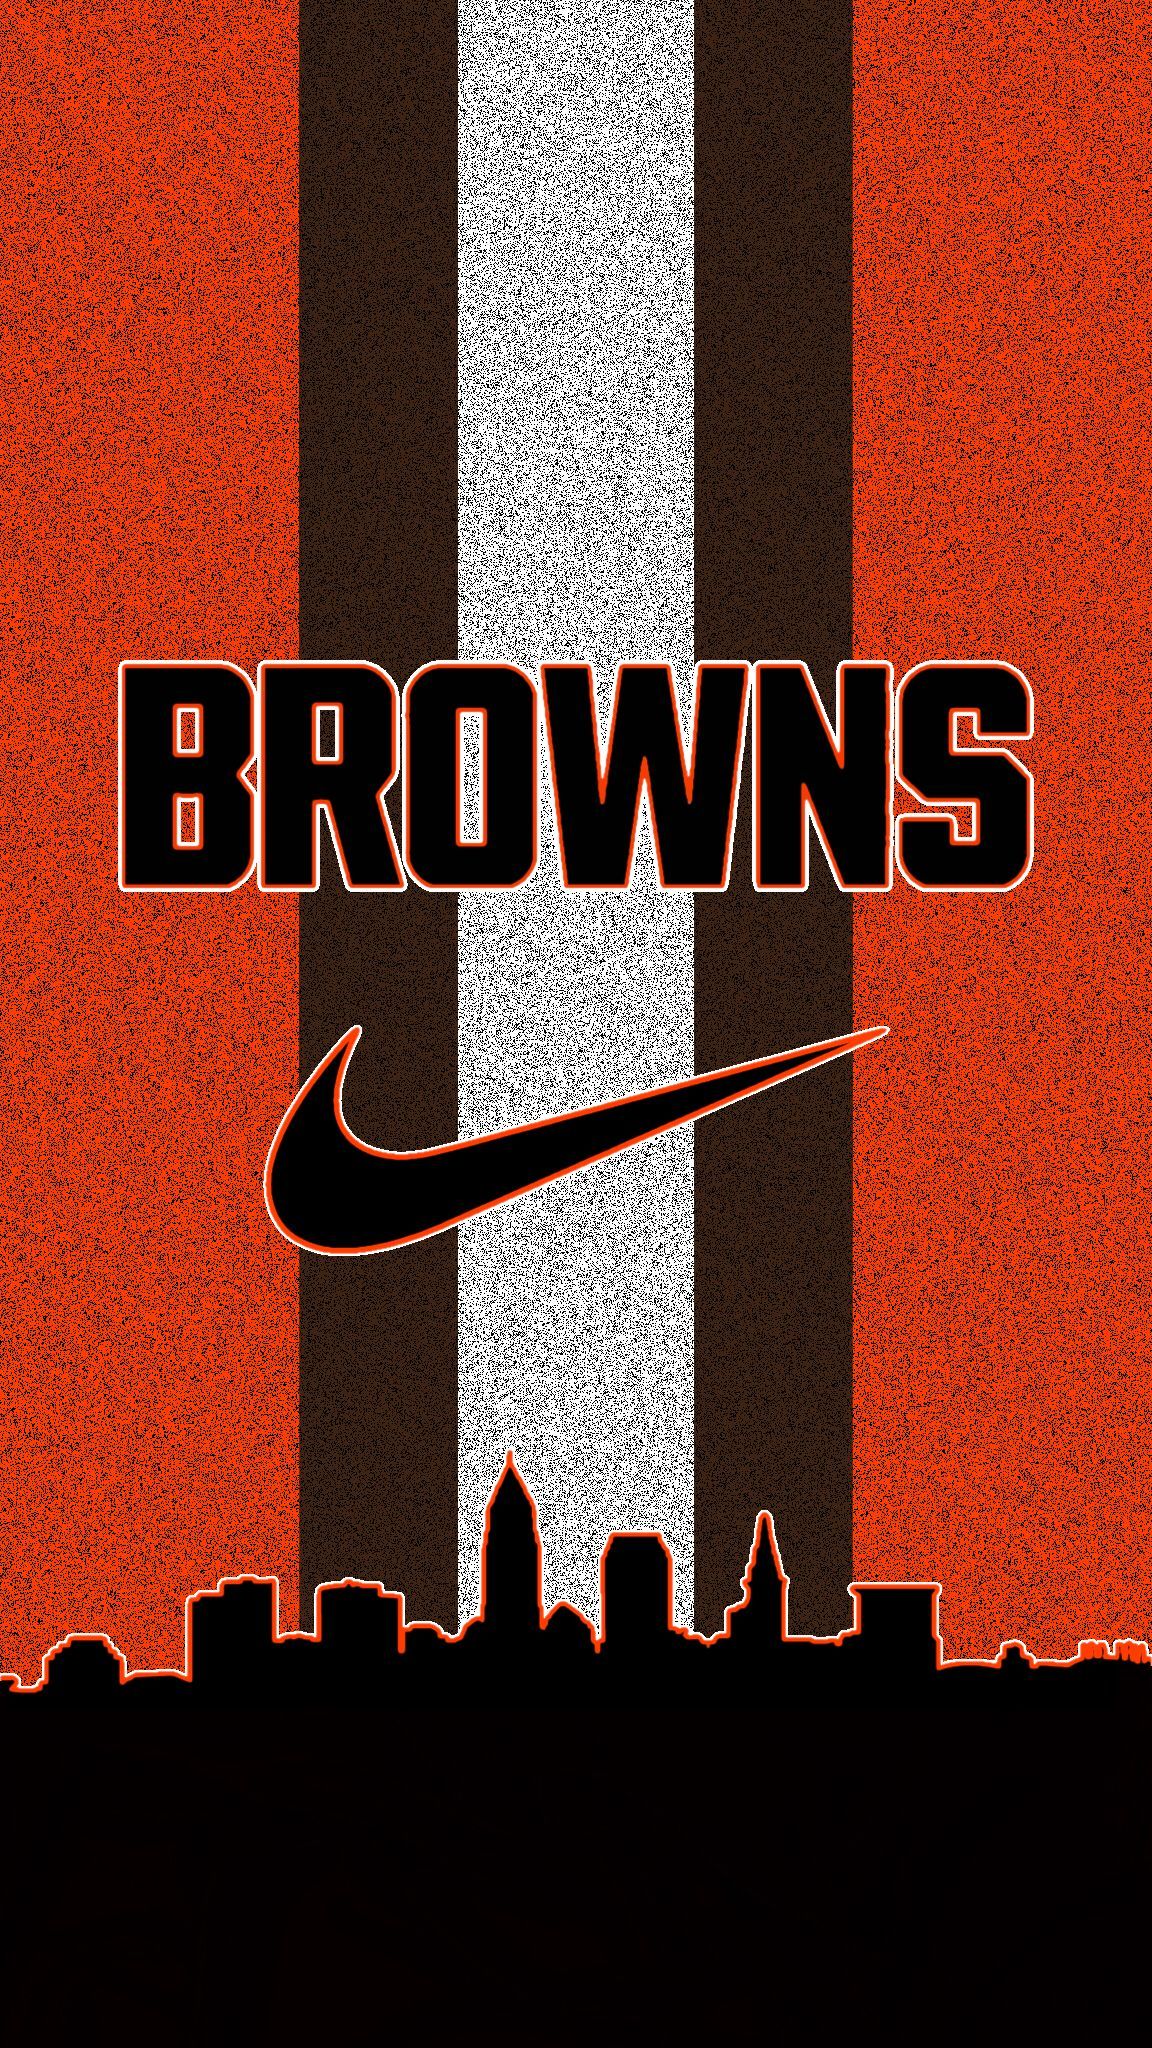 Cleveland Browns HD Wallpaper. Cleveland browns wallpaper, Cleveland browns, Cleveland browns football